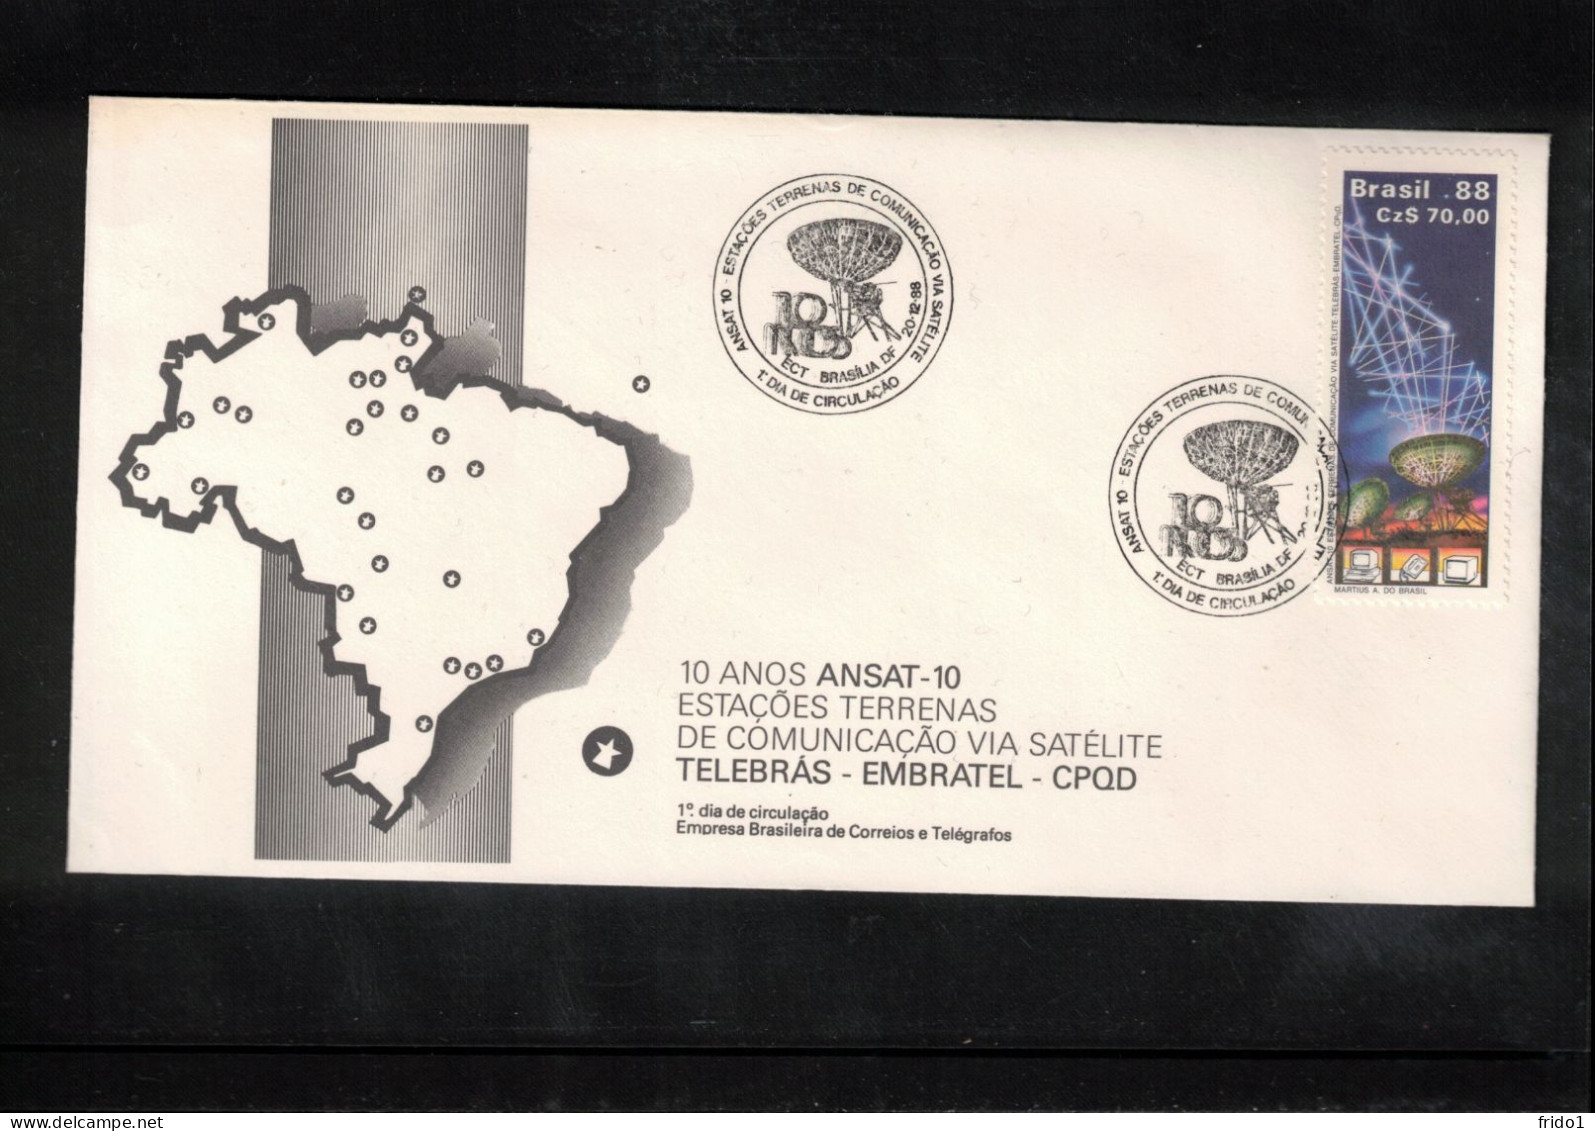 Brasil 1988 Space / Weltraum 10th Anniversary Of ANSAT-10 Satellite Communications Interesting Cover FDC - Amérique Du Sud